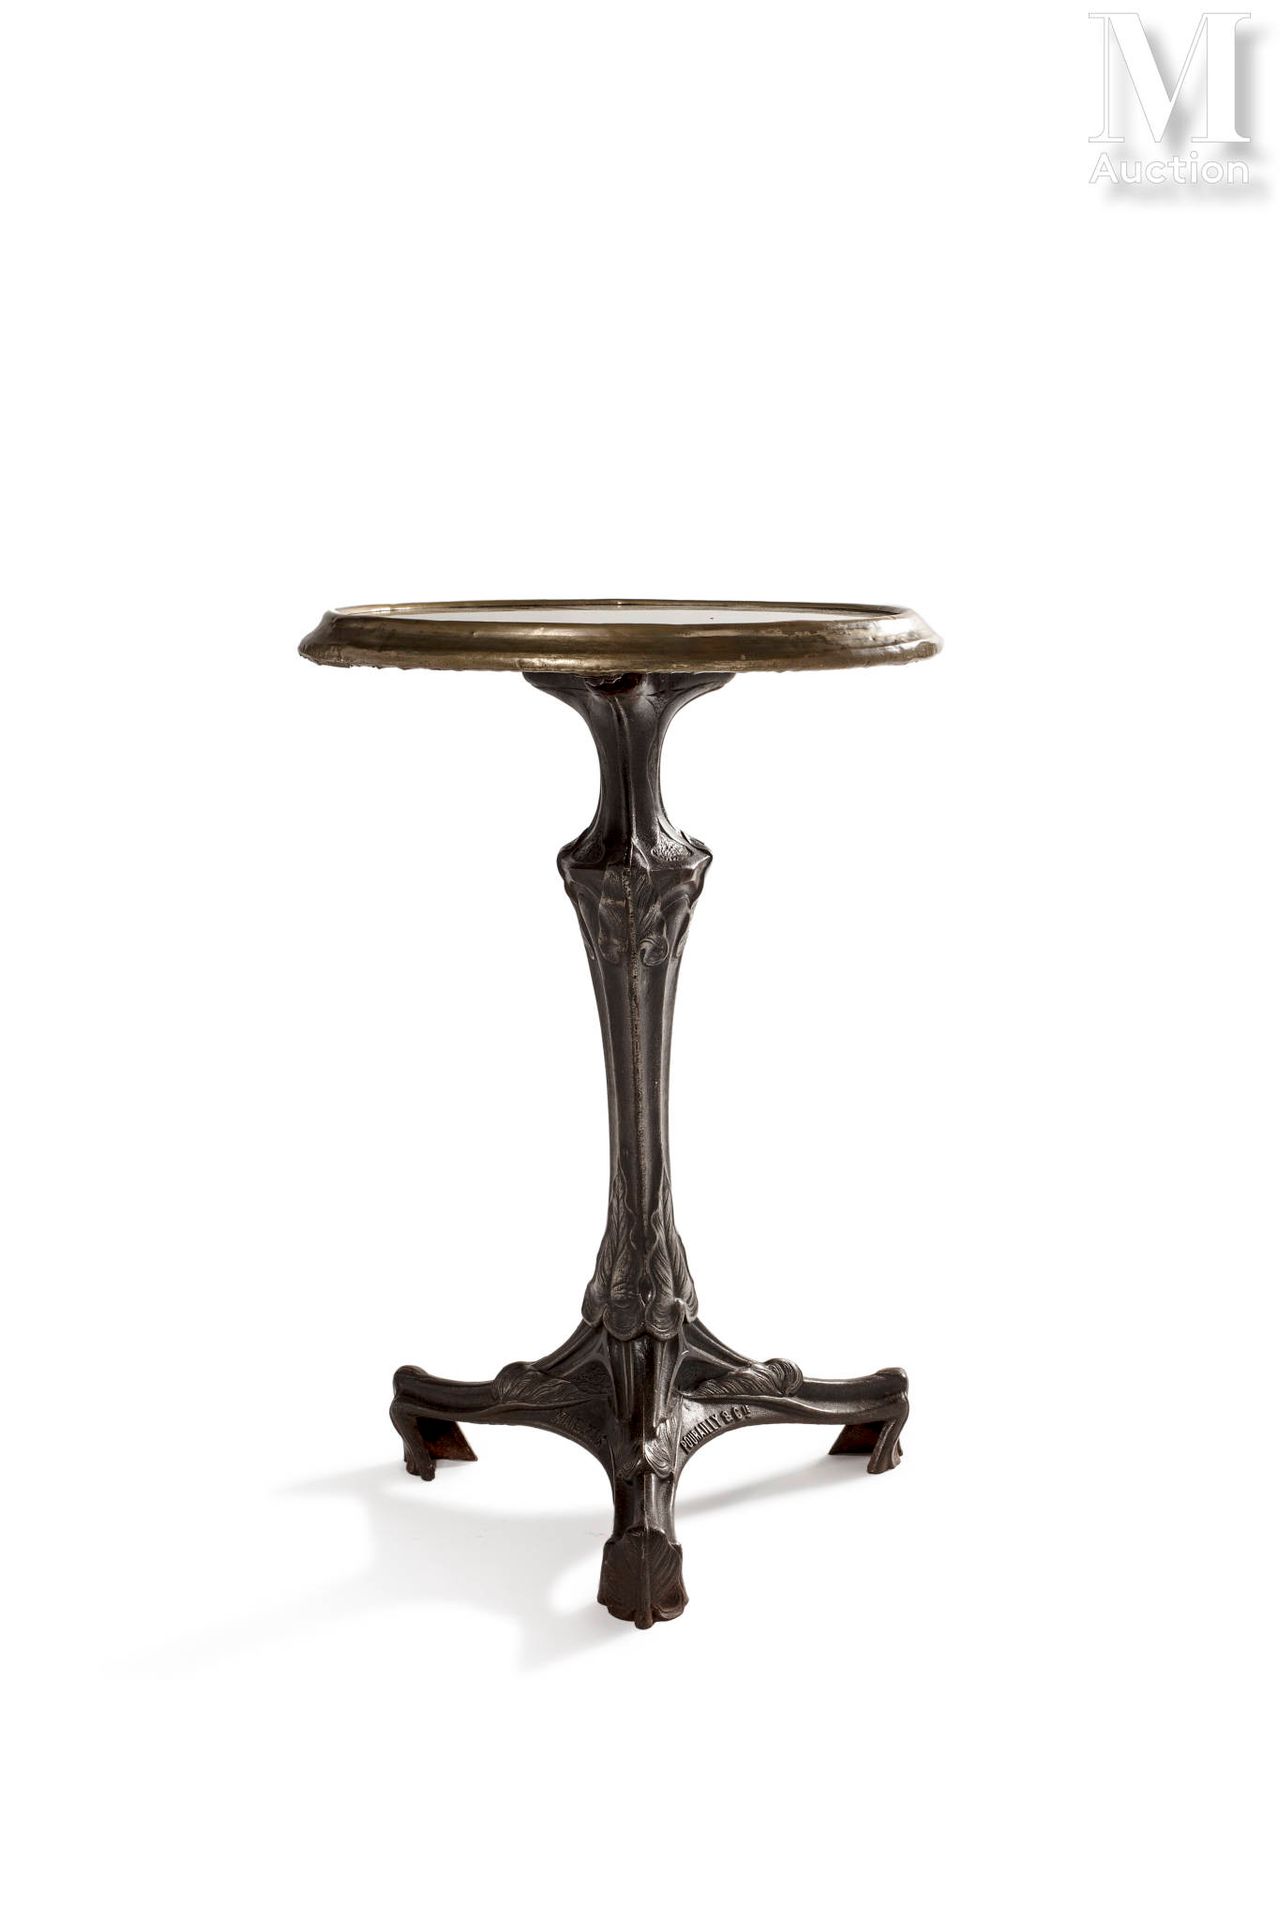 TRAVAIL ART NOUVEAU 基座桌，有一个圆形的镜面玻璃桌面，放在一个装饰有风格化植物图案的三脚架铸铁底座上。

标有 "Charlionais, &hellip;